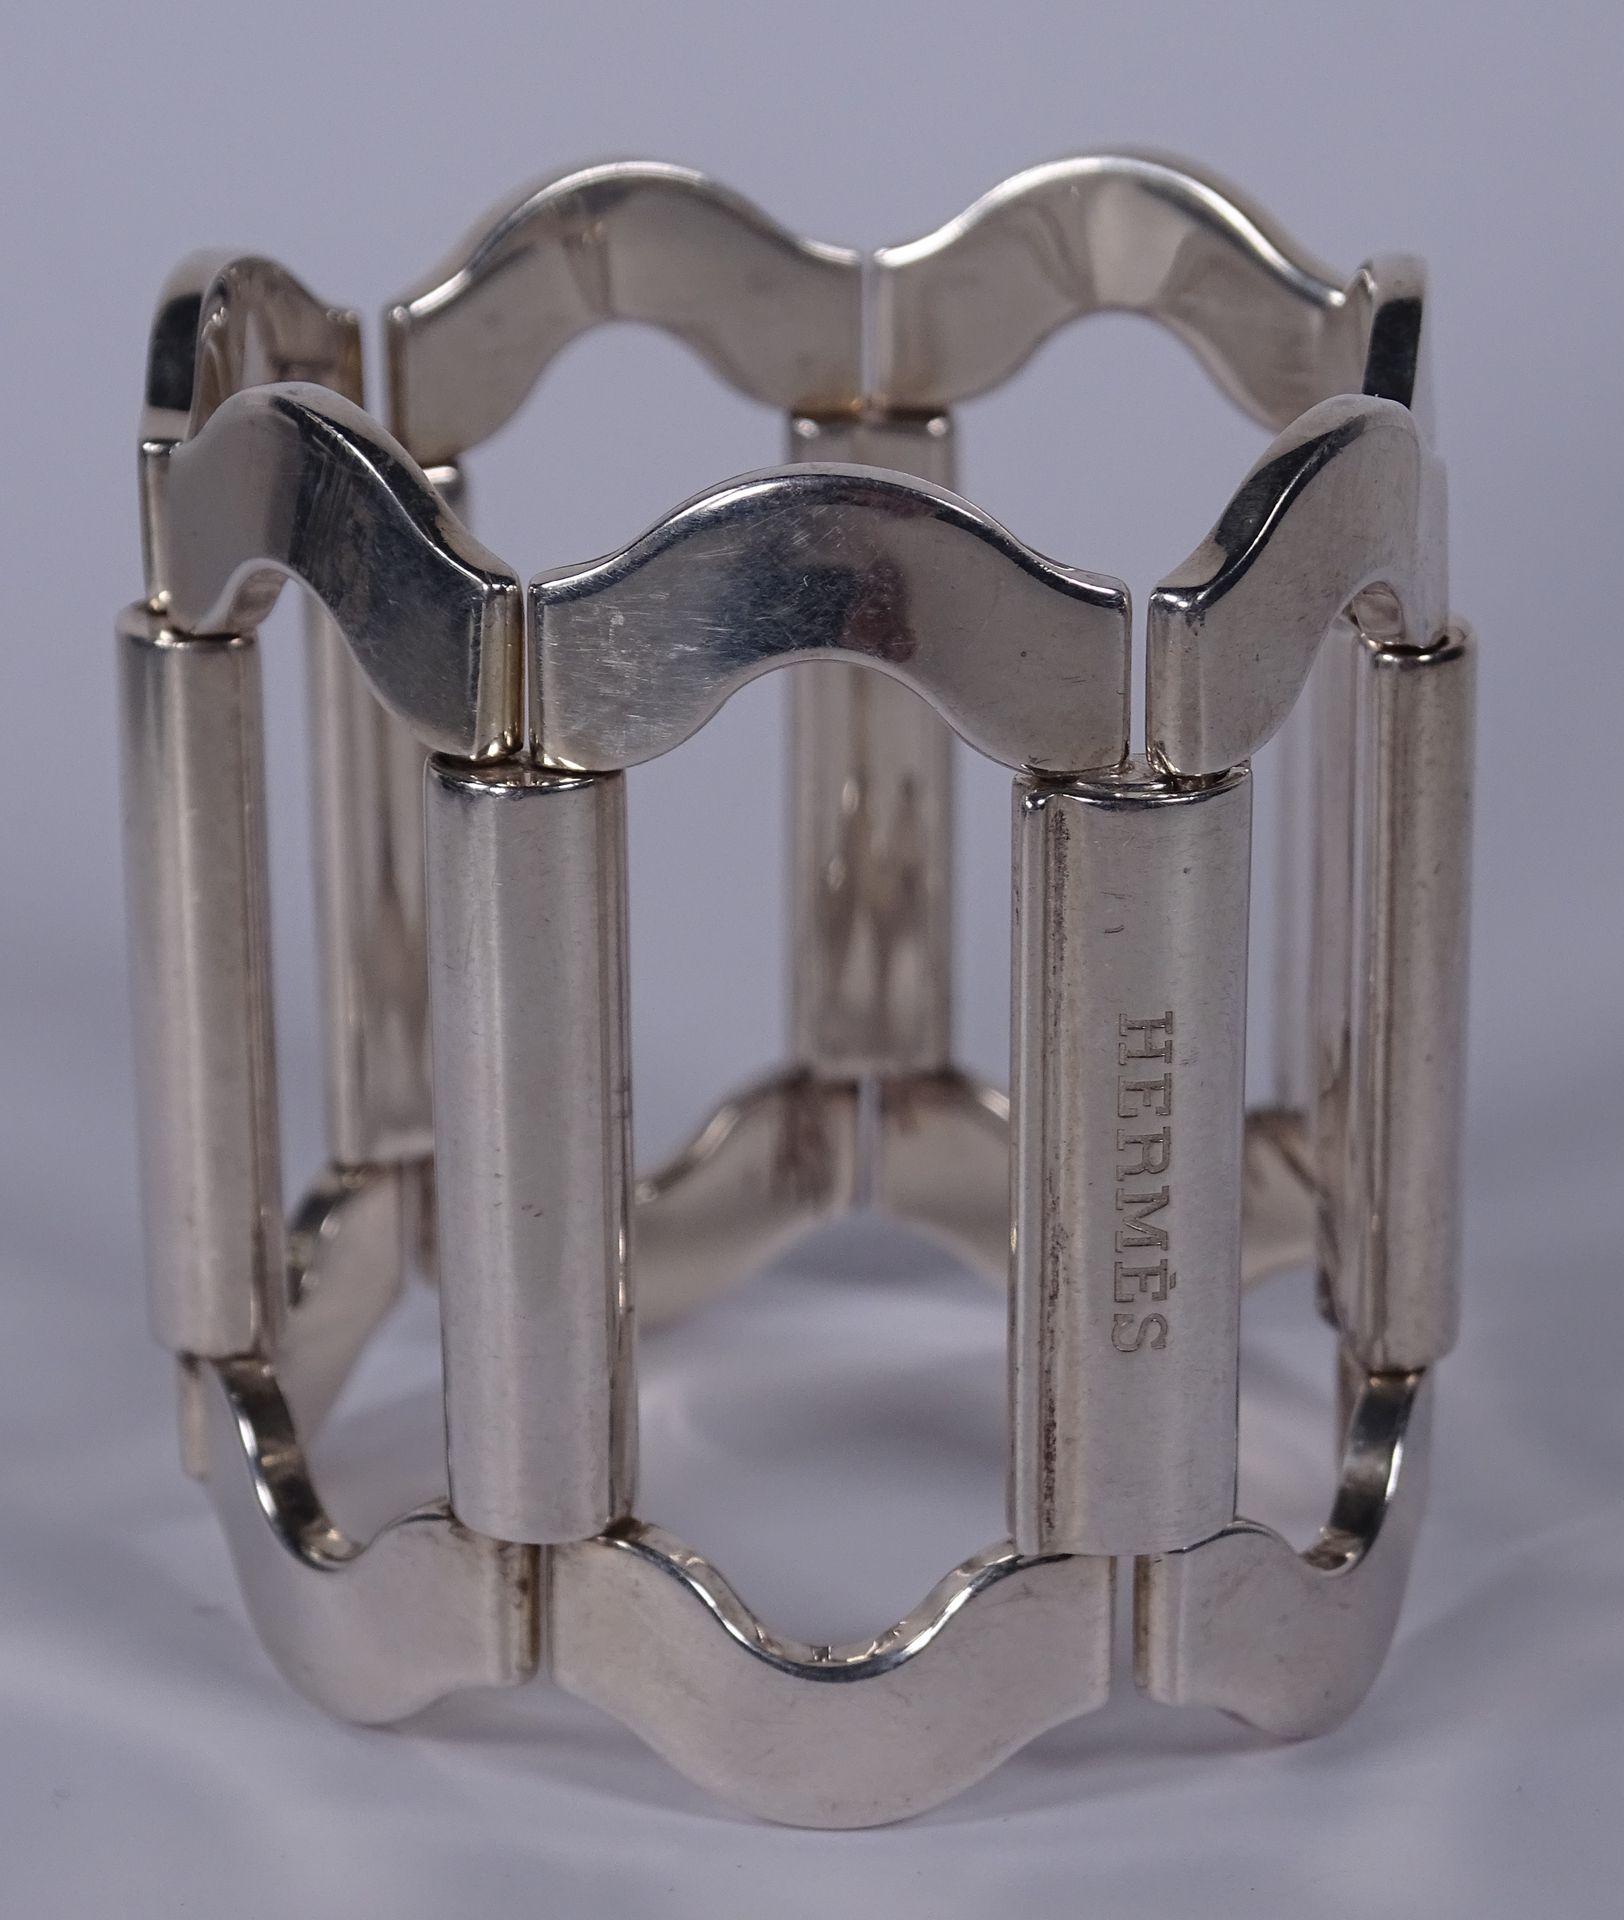 HERMES Armband im Tank-Stil aus Silber "artikulierte Raupen".

Länge: 16,5 cm.

&hellip;